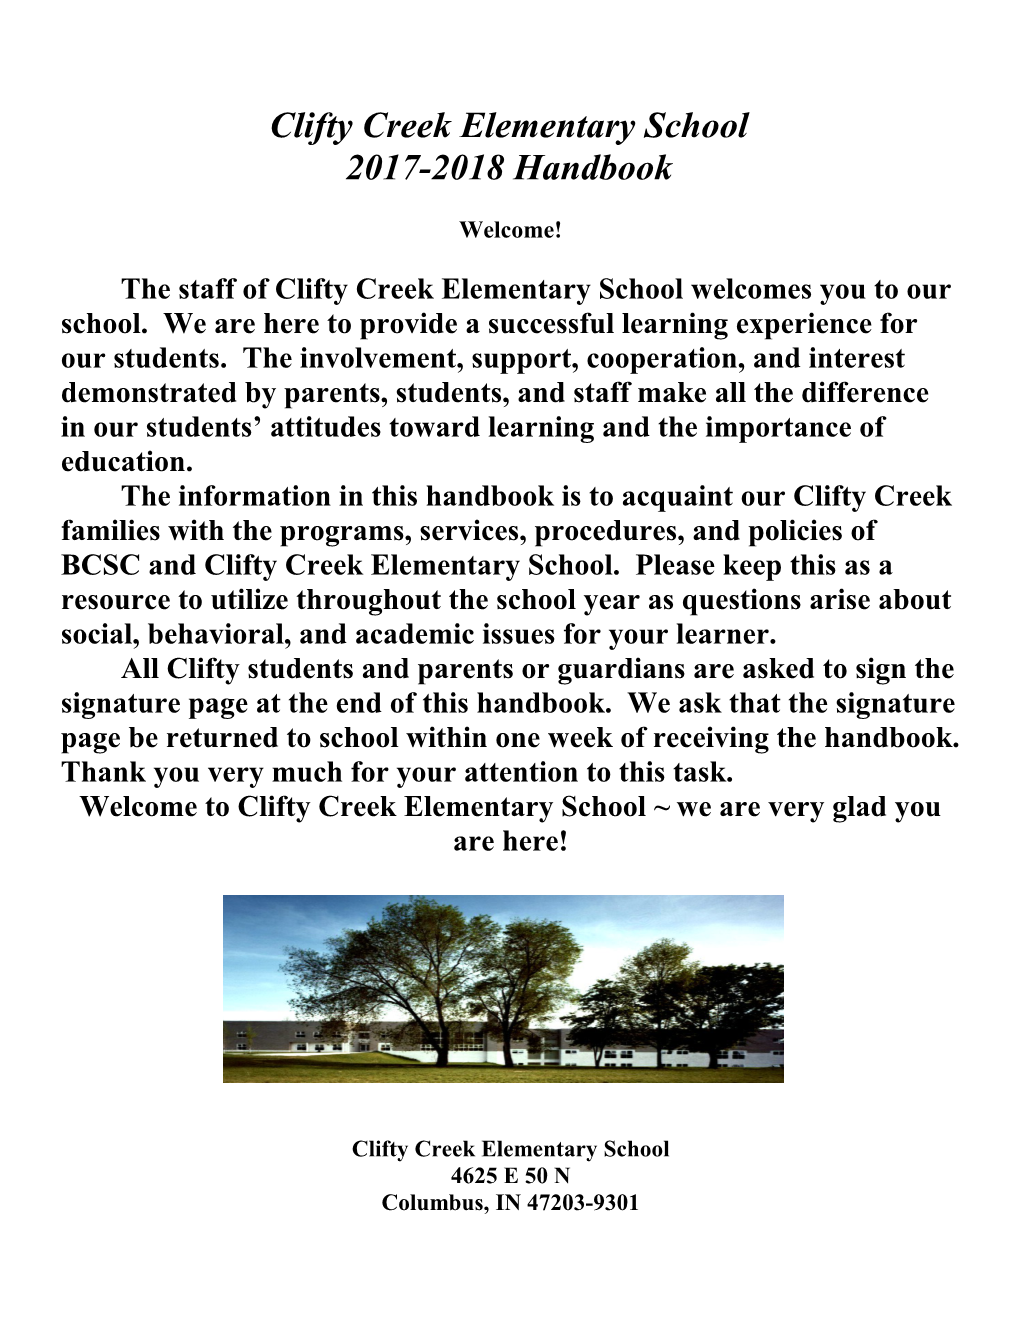 Clifty Creek Elementary School